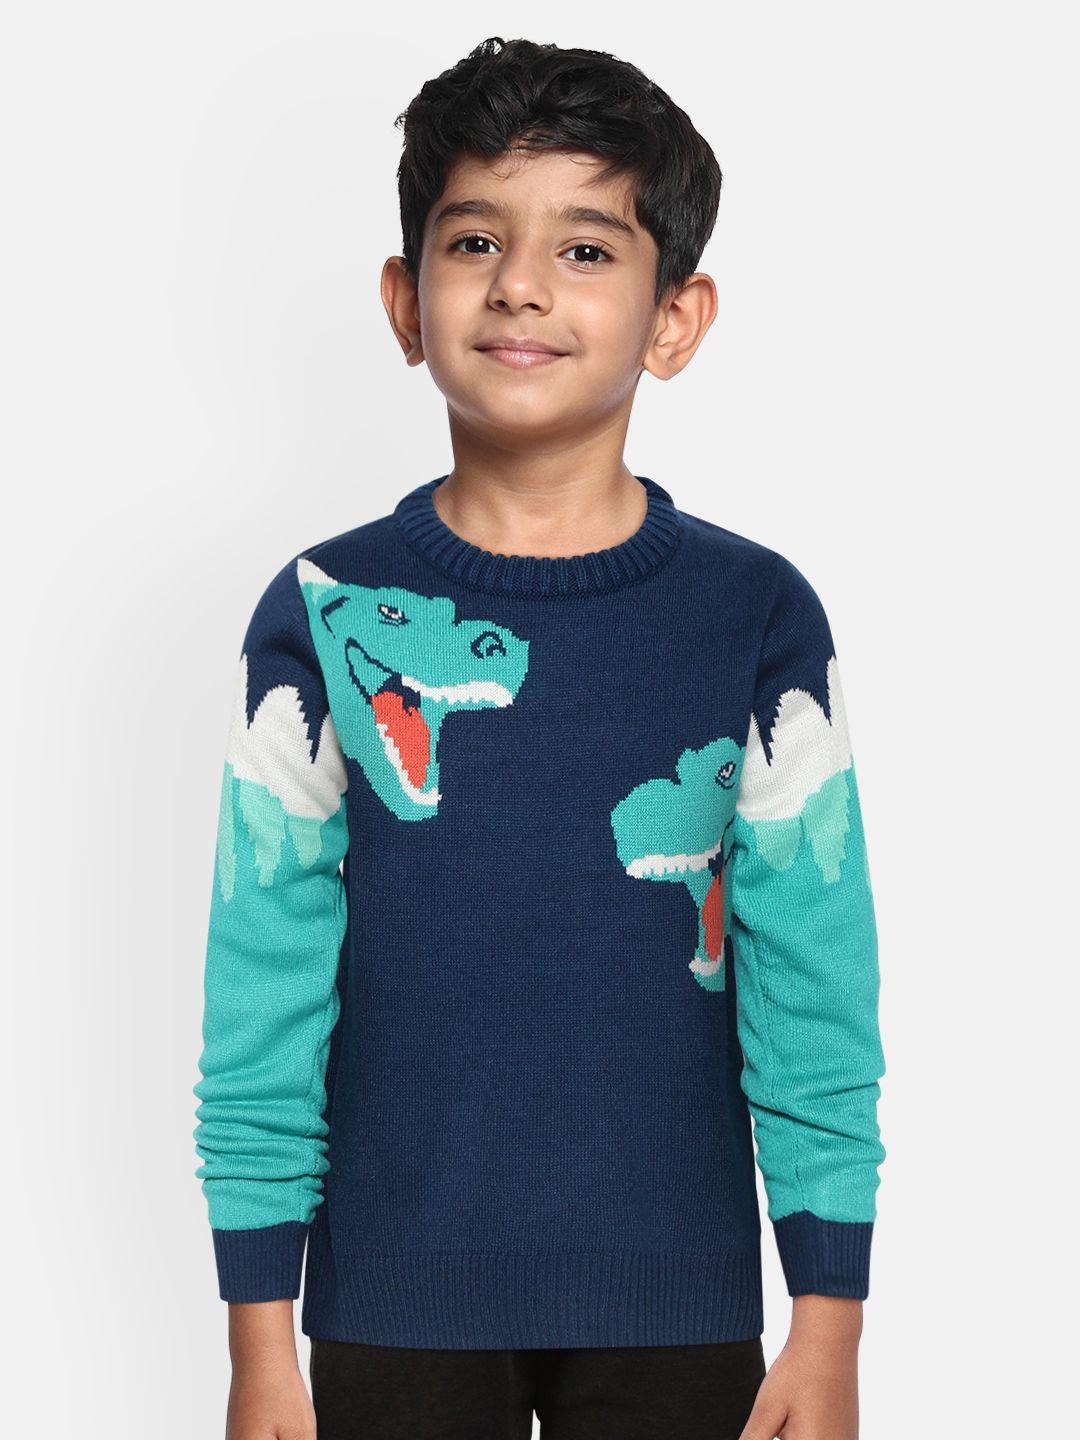 yk-boys-navy-blue-&-green-dinosaur-patterned-acrylic-sweater